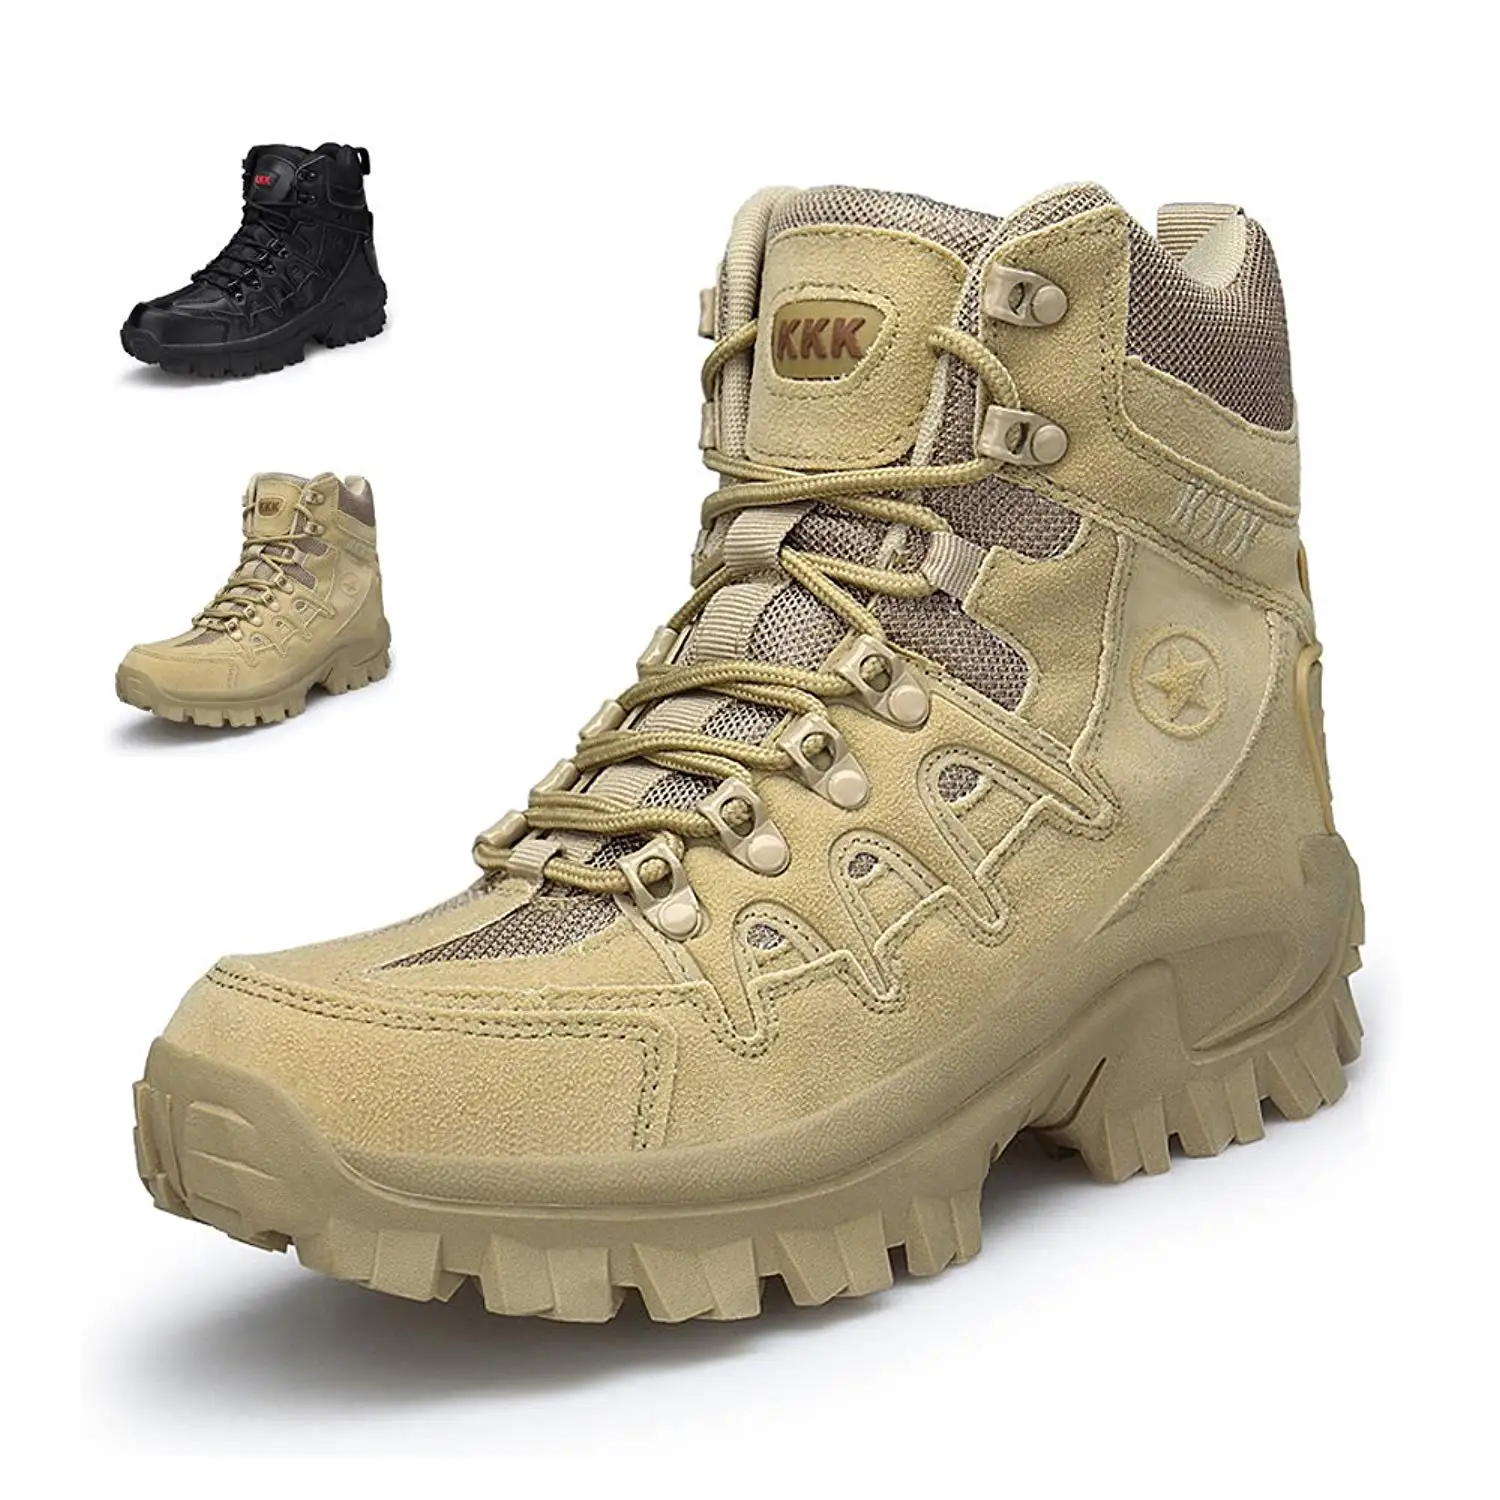 composite toe jungle boots